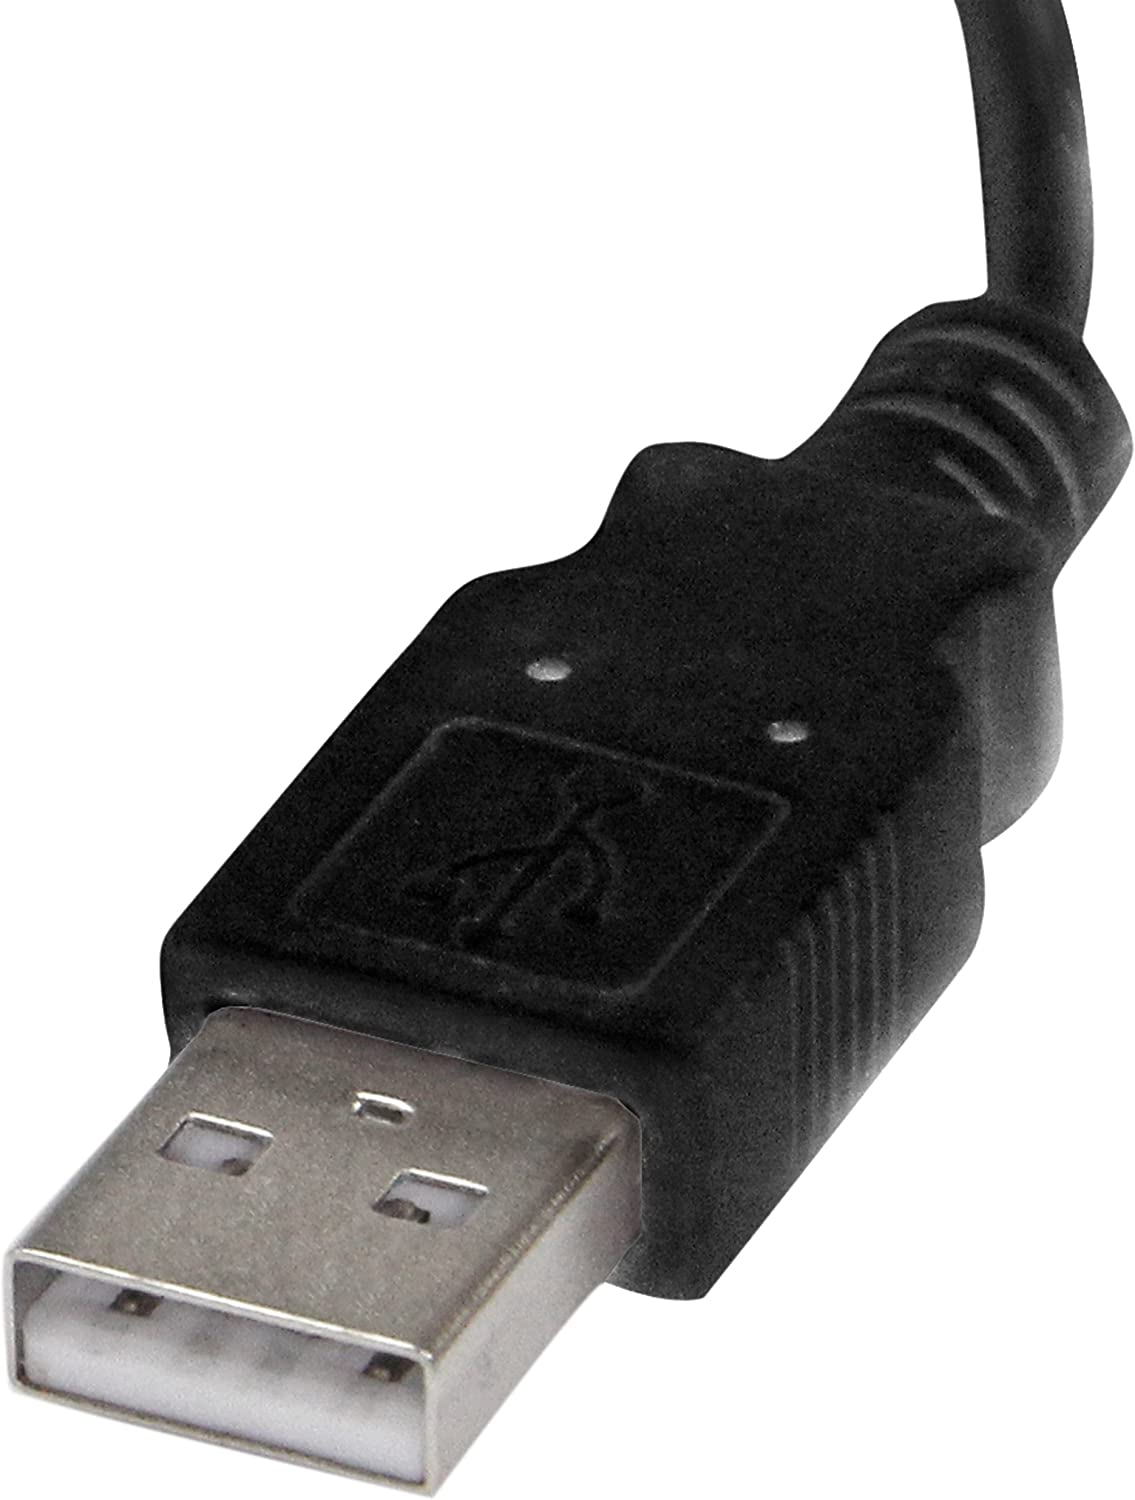 StarTech 56K USB DIAL-UP FAX MODEM - V.92 EXTERNAL(USB56KEMH2) - Win-Pro Consultancy Pte Ltd